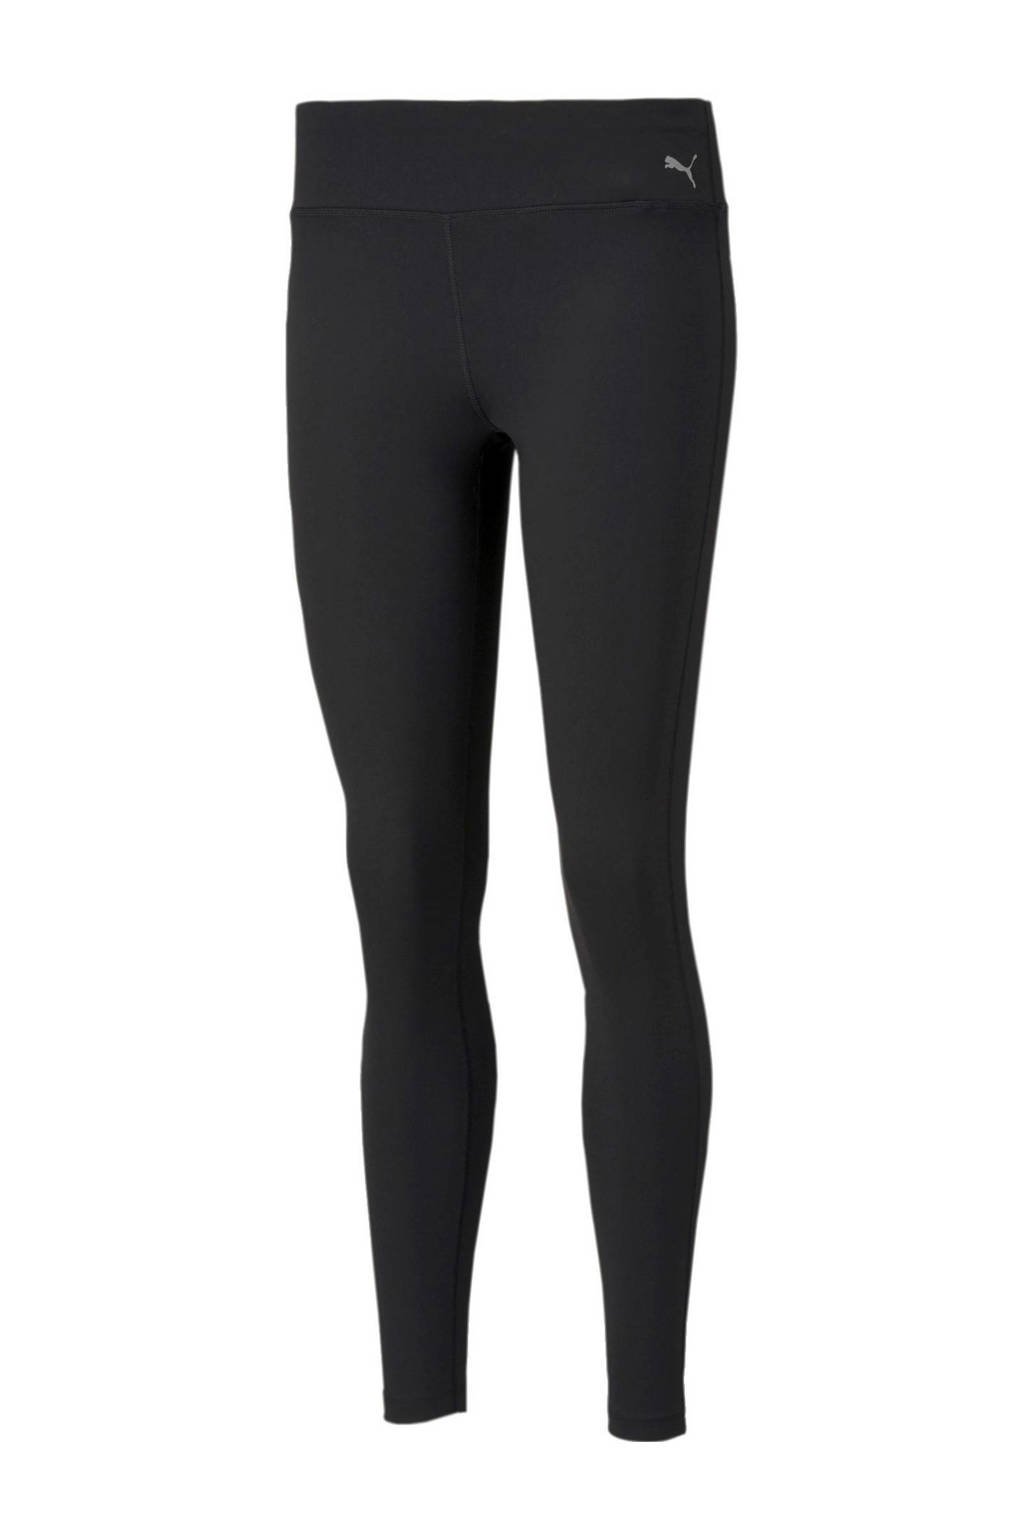 Zwarte dames Puma sportlegging van polyester met slim fit, regular waist en elastische tailleband